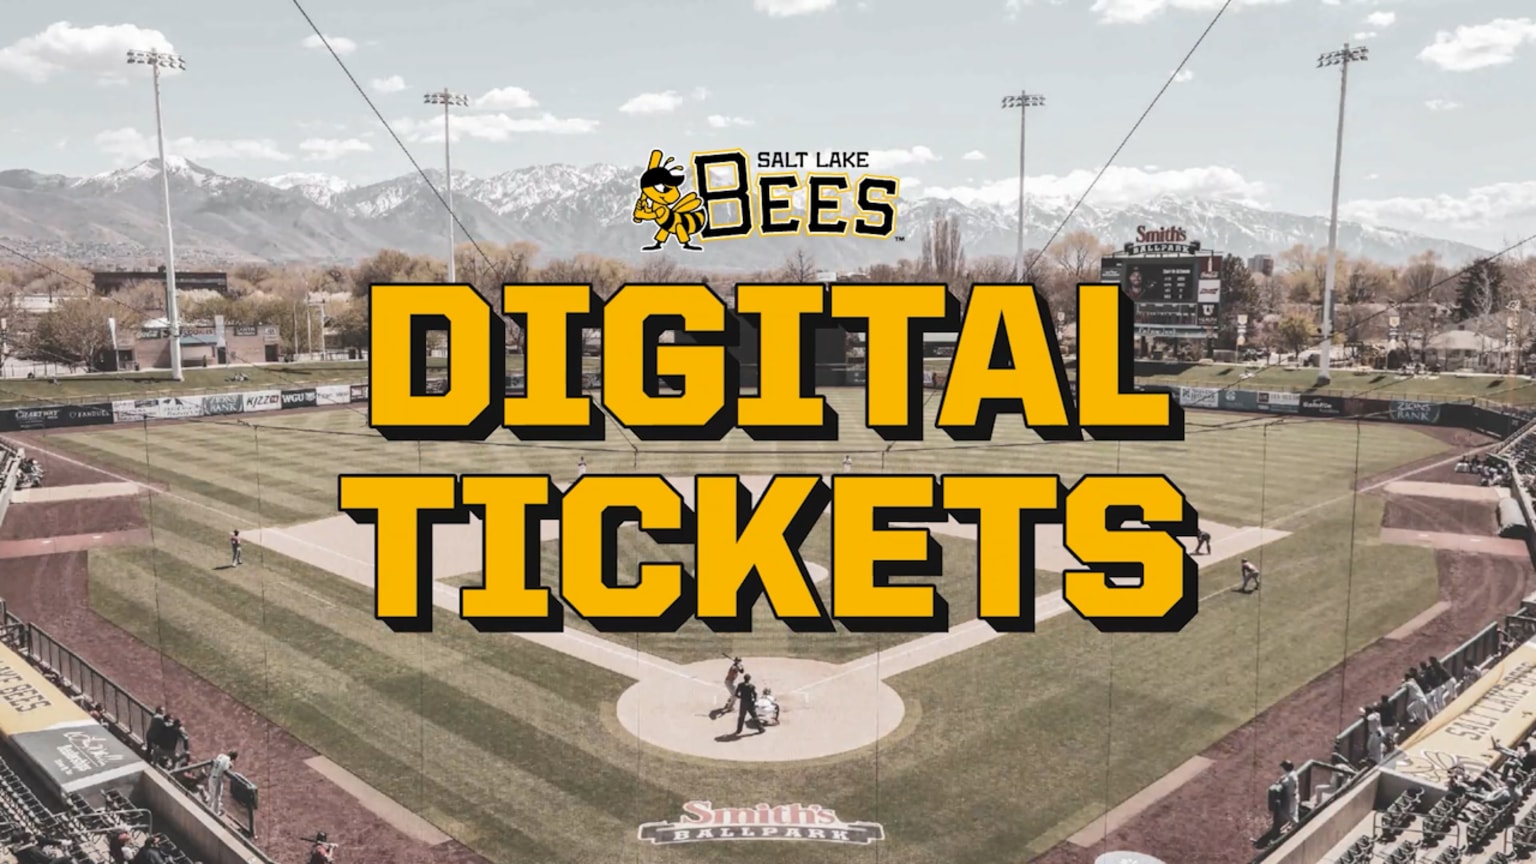 2019 Best Marketing Campaign Award: Salt Lake Bees - Ballpark Digest